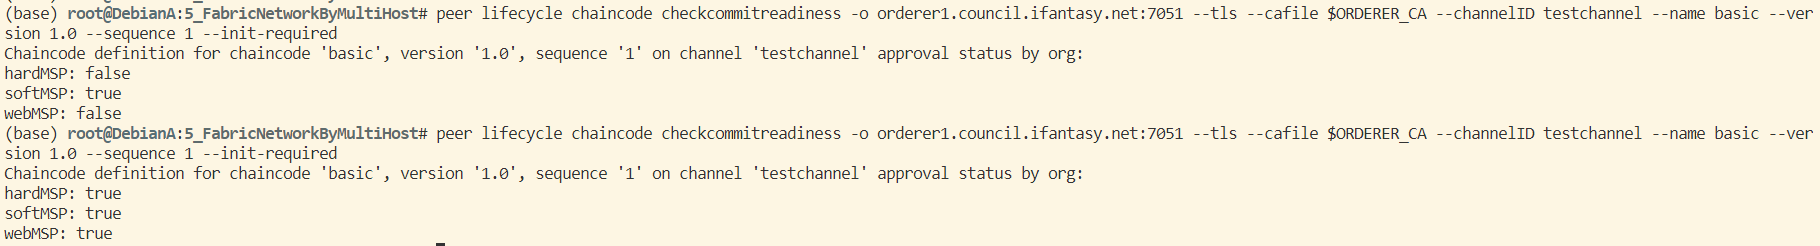 DebianA 链码批准情况2